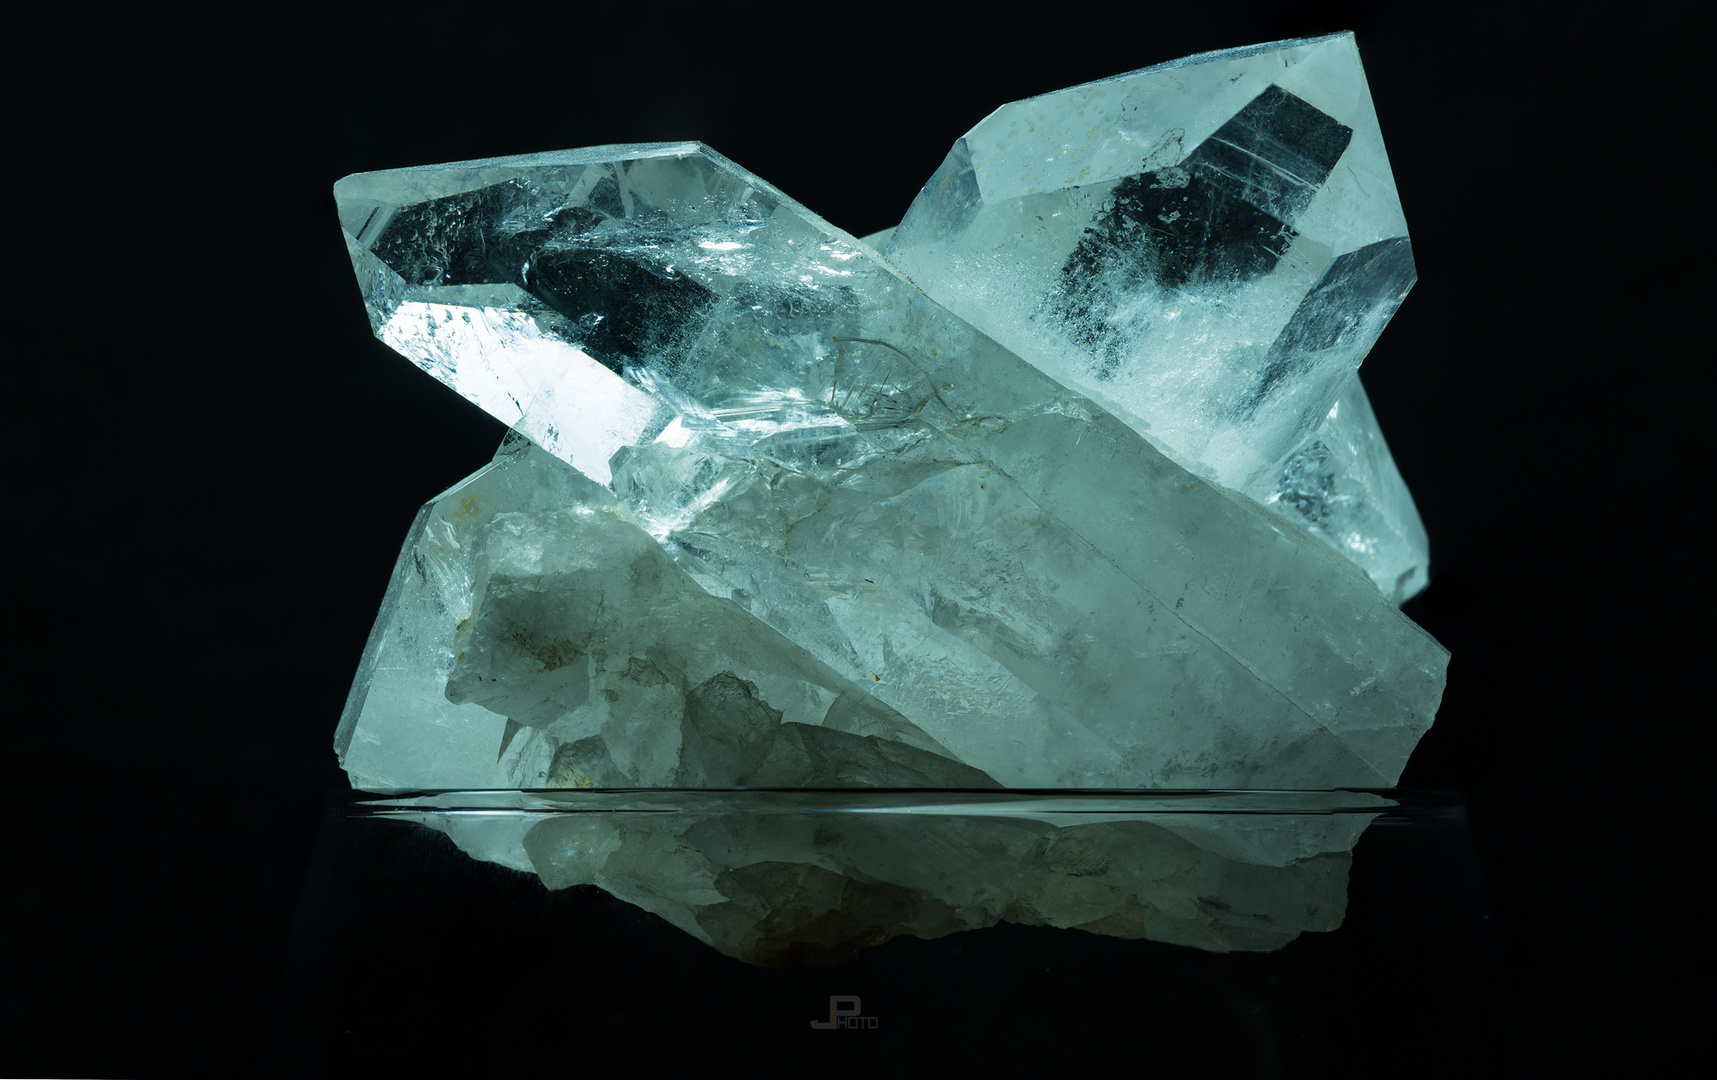 Bergkristall on the rocks